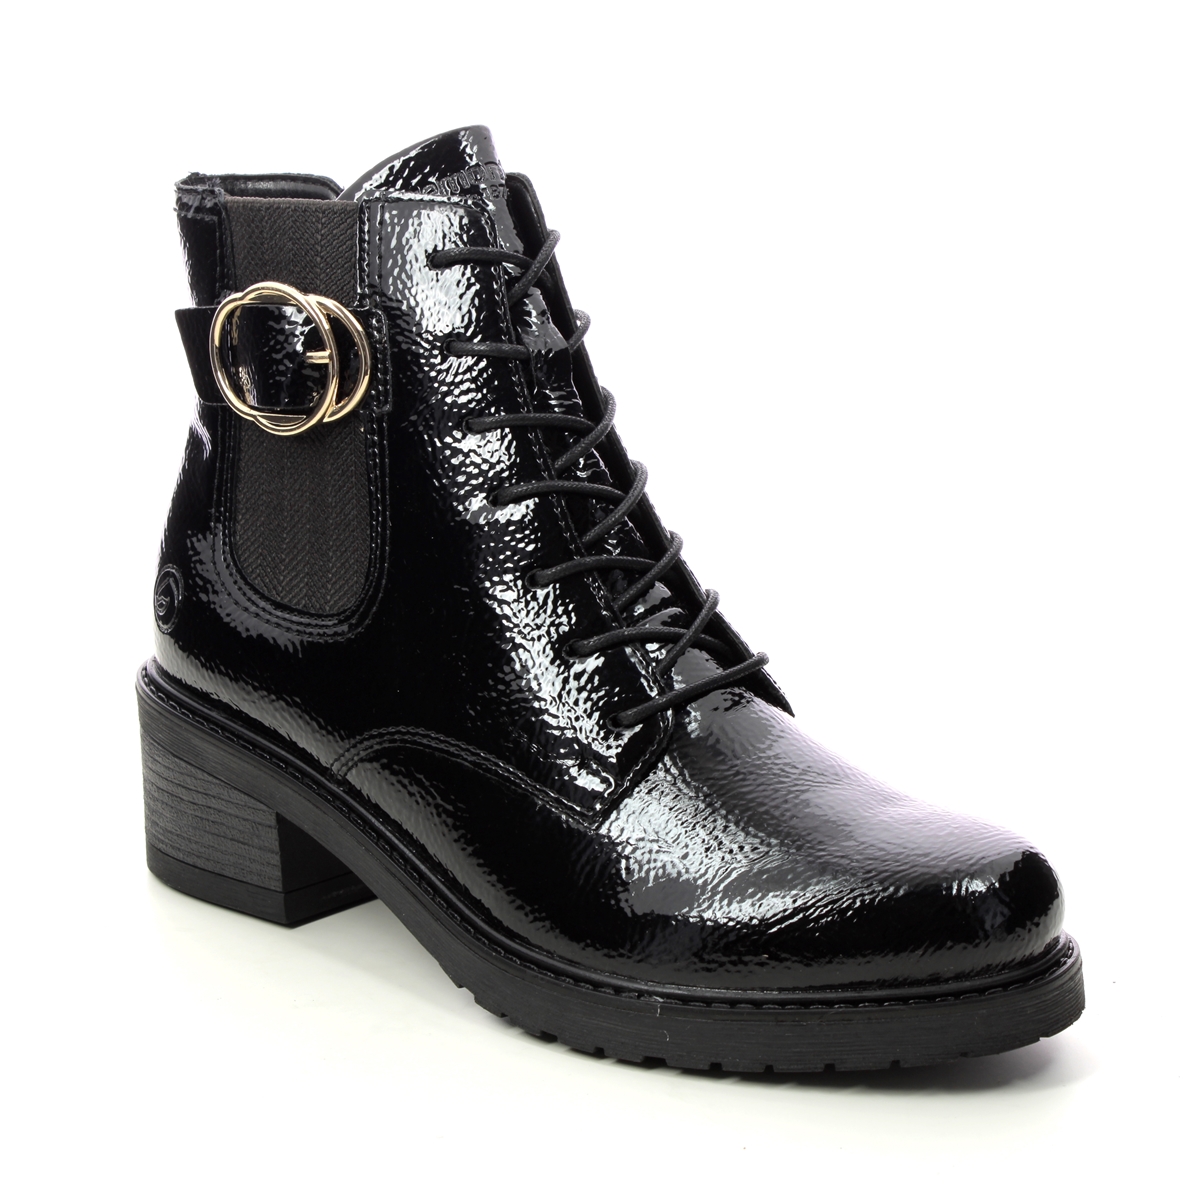 Remonte Menarem Buck Black Patent Womens Lace Up Boots D1A72-01 In Size 40 In Plain Black Patent